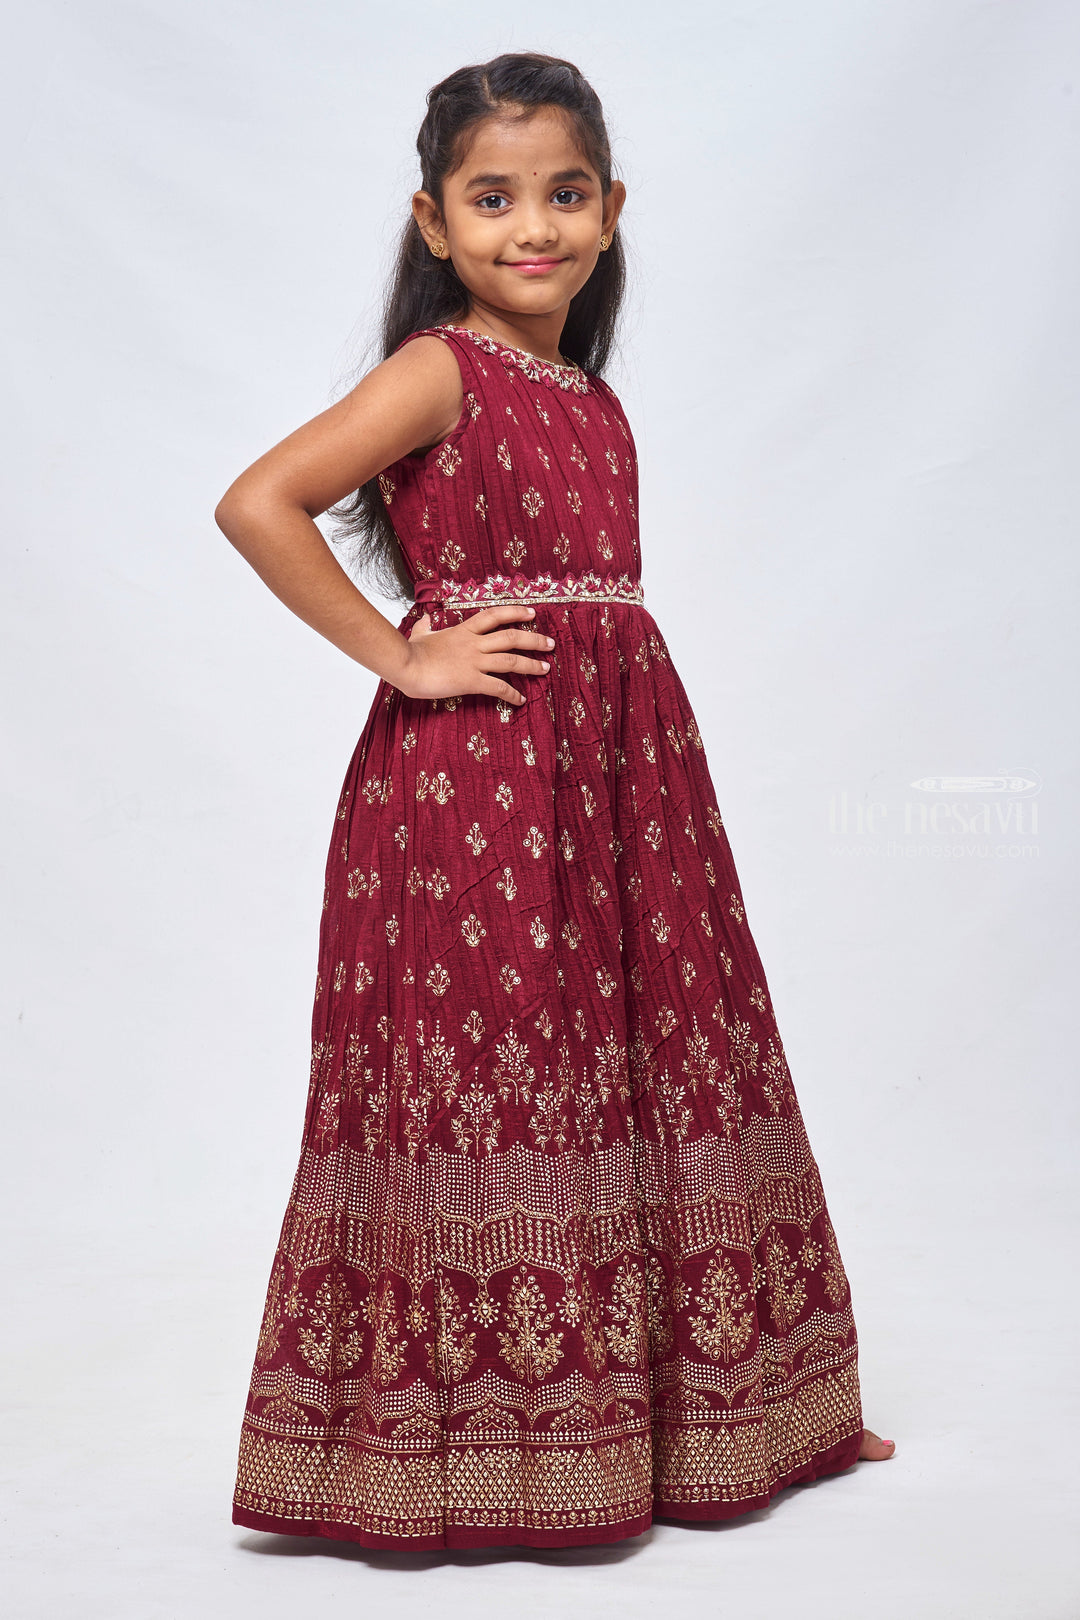 The Nesavu Girls Silk Gown Foil Printed Purple Pleated Elegance: Full Length Gown for Girls Nesavu Beautiful Anarkali Dress for Wedding | Fancy Anarkali Dress | The Nesavu